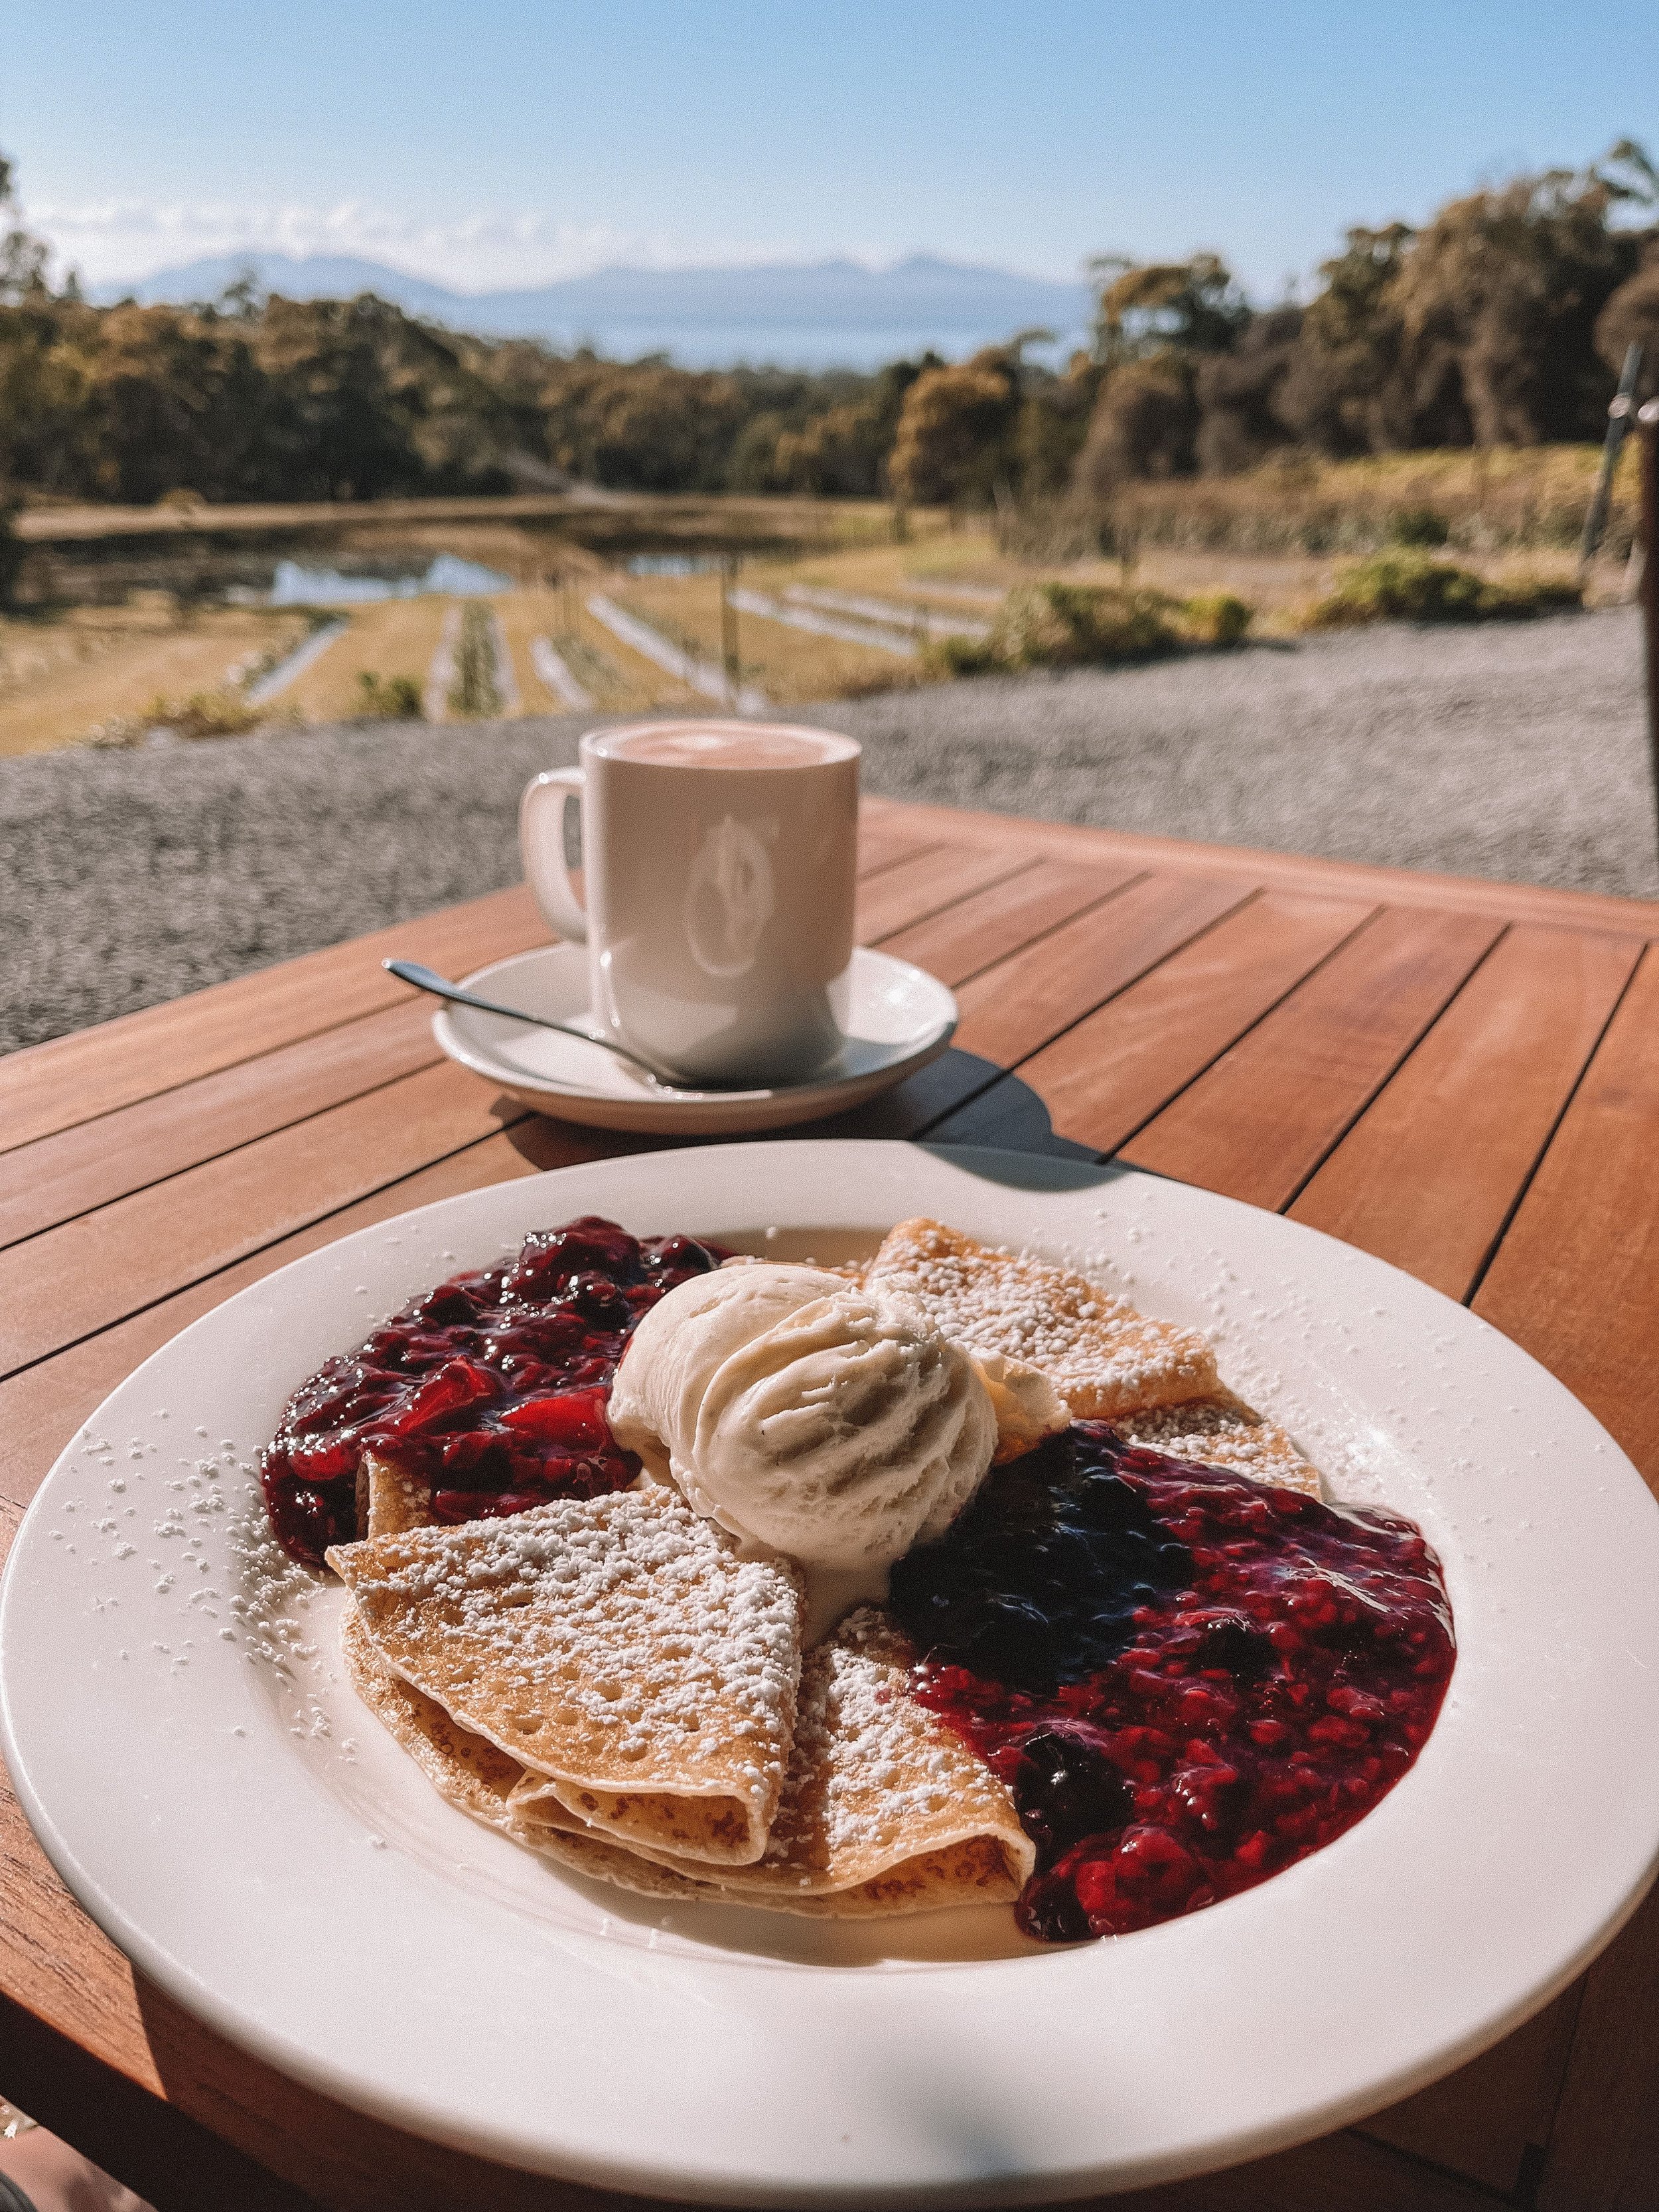 Home made crepes and jam - Kate's Berry Farm - Swansea - Tasmania - Australia